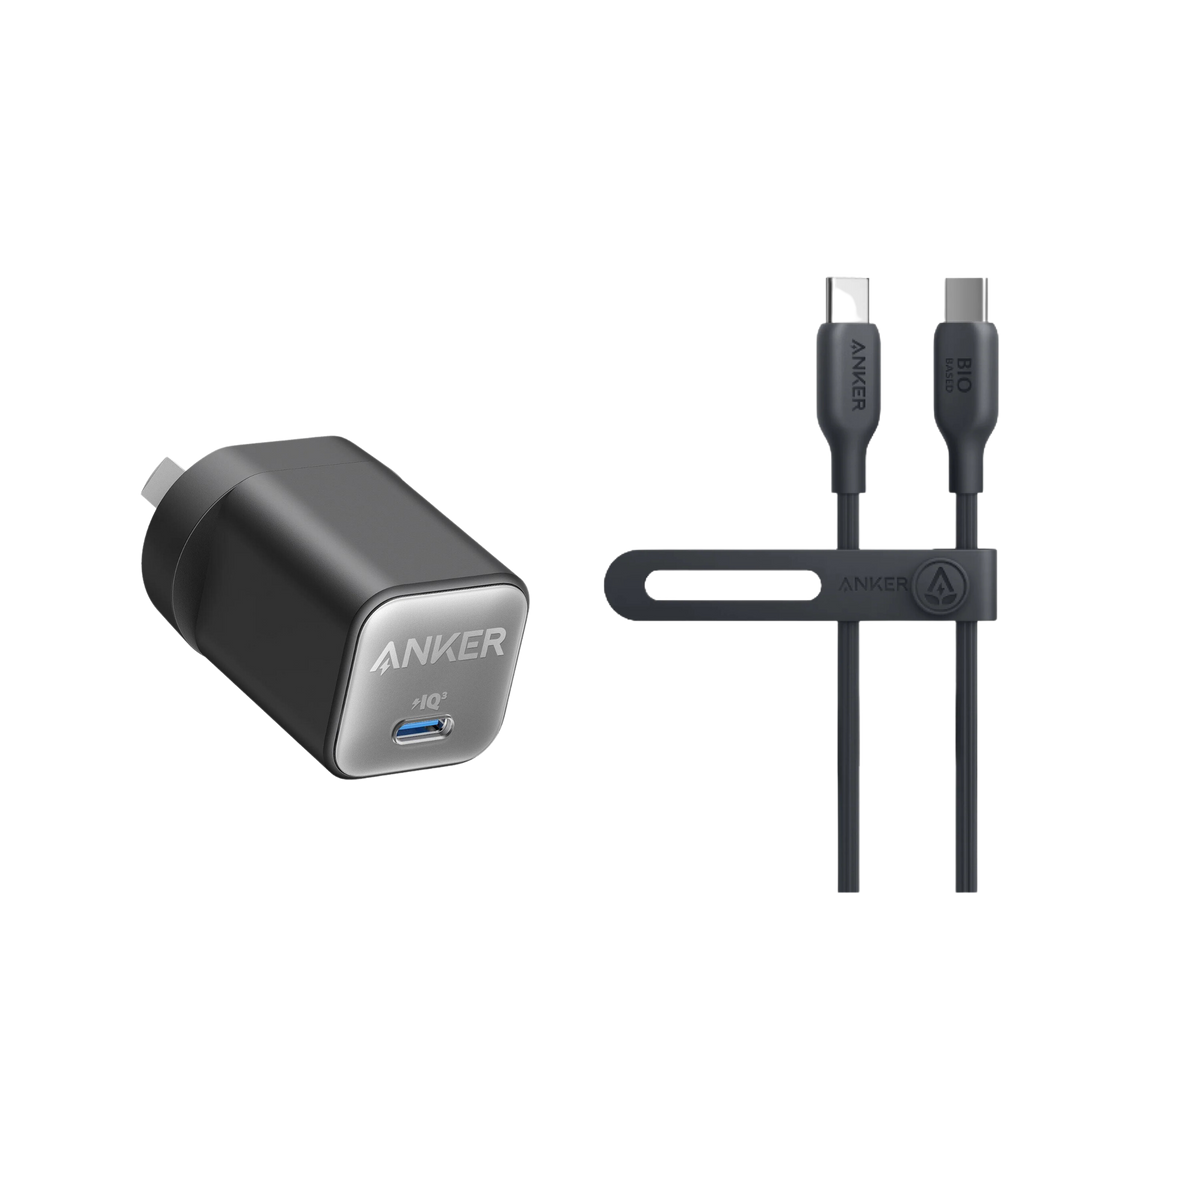 Anker &lt;b&gt;511&lt;/b&gt; Charger (Nano 3, 30W) and Anker &lt;b&gt;543&lt;/b&gt; USB-C to USB-C Cable (Bio-Based)